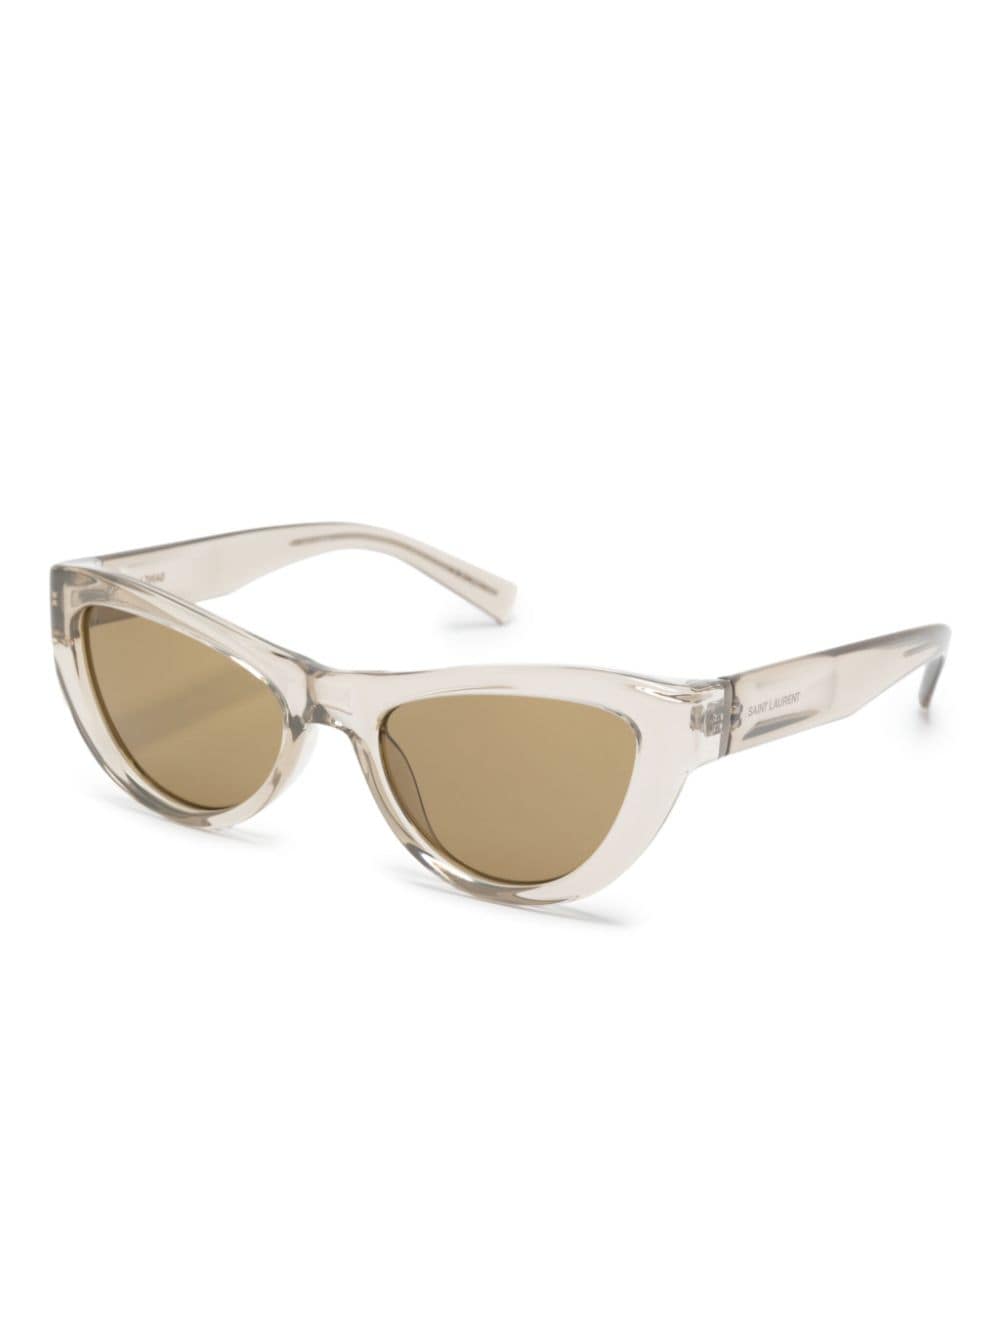 Saint Laurent Eyewear 676 cat-eye sunglasses - Beige